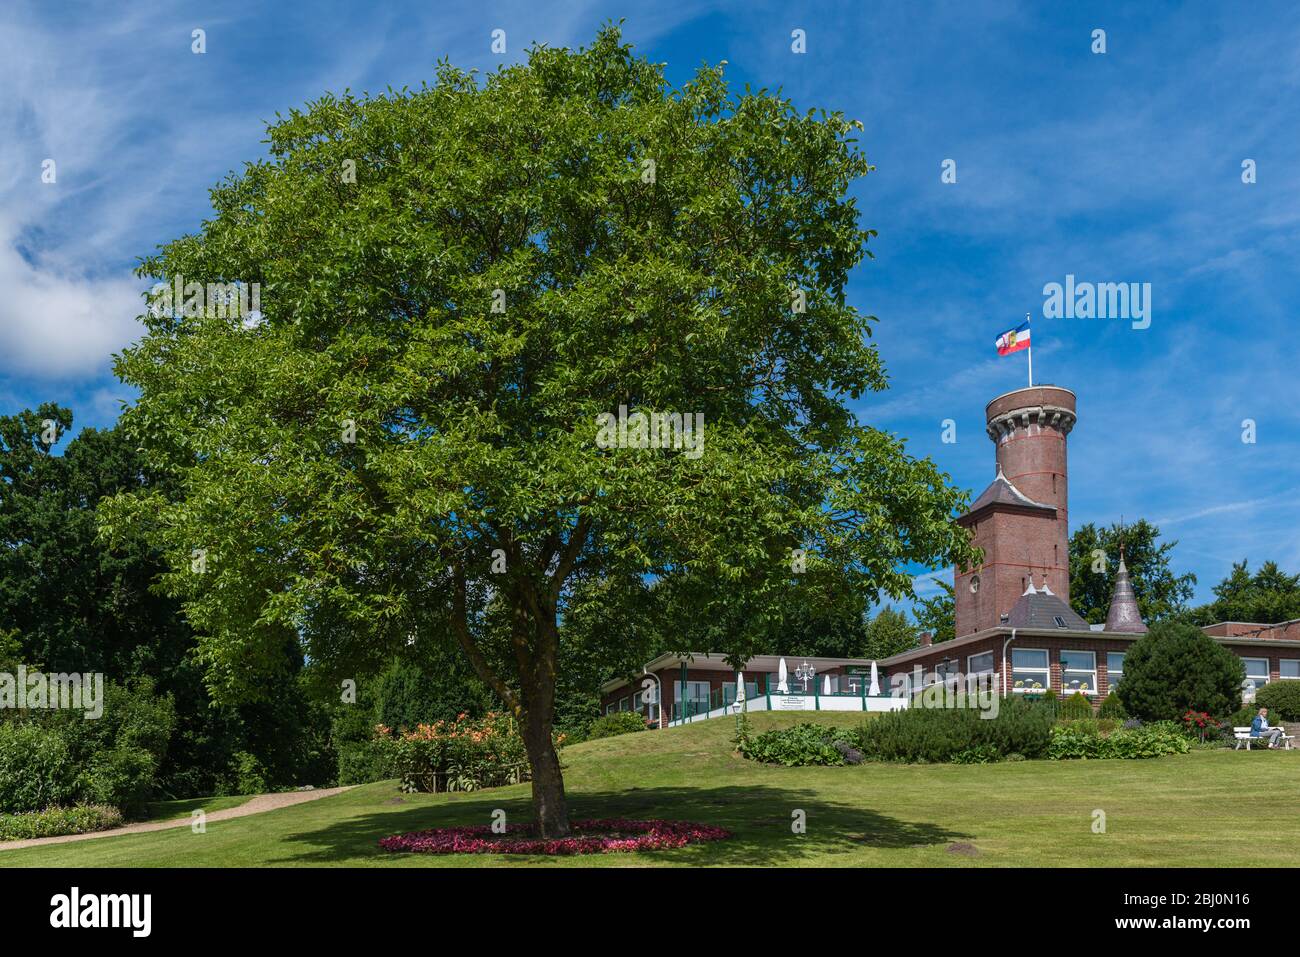 Bismarckturm or Bismarck Tower in the small country town of Lütjenburg, Kreis Plön, Schleswig-Holstein, North Germany, Central Europe Stock Photo